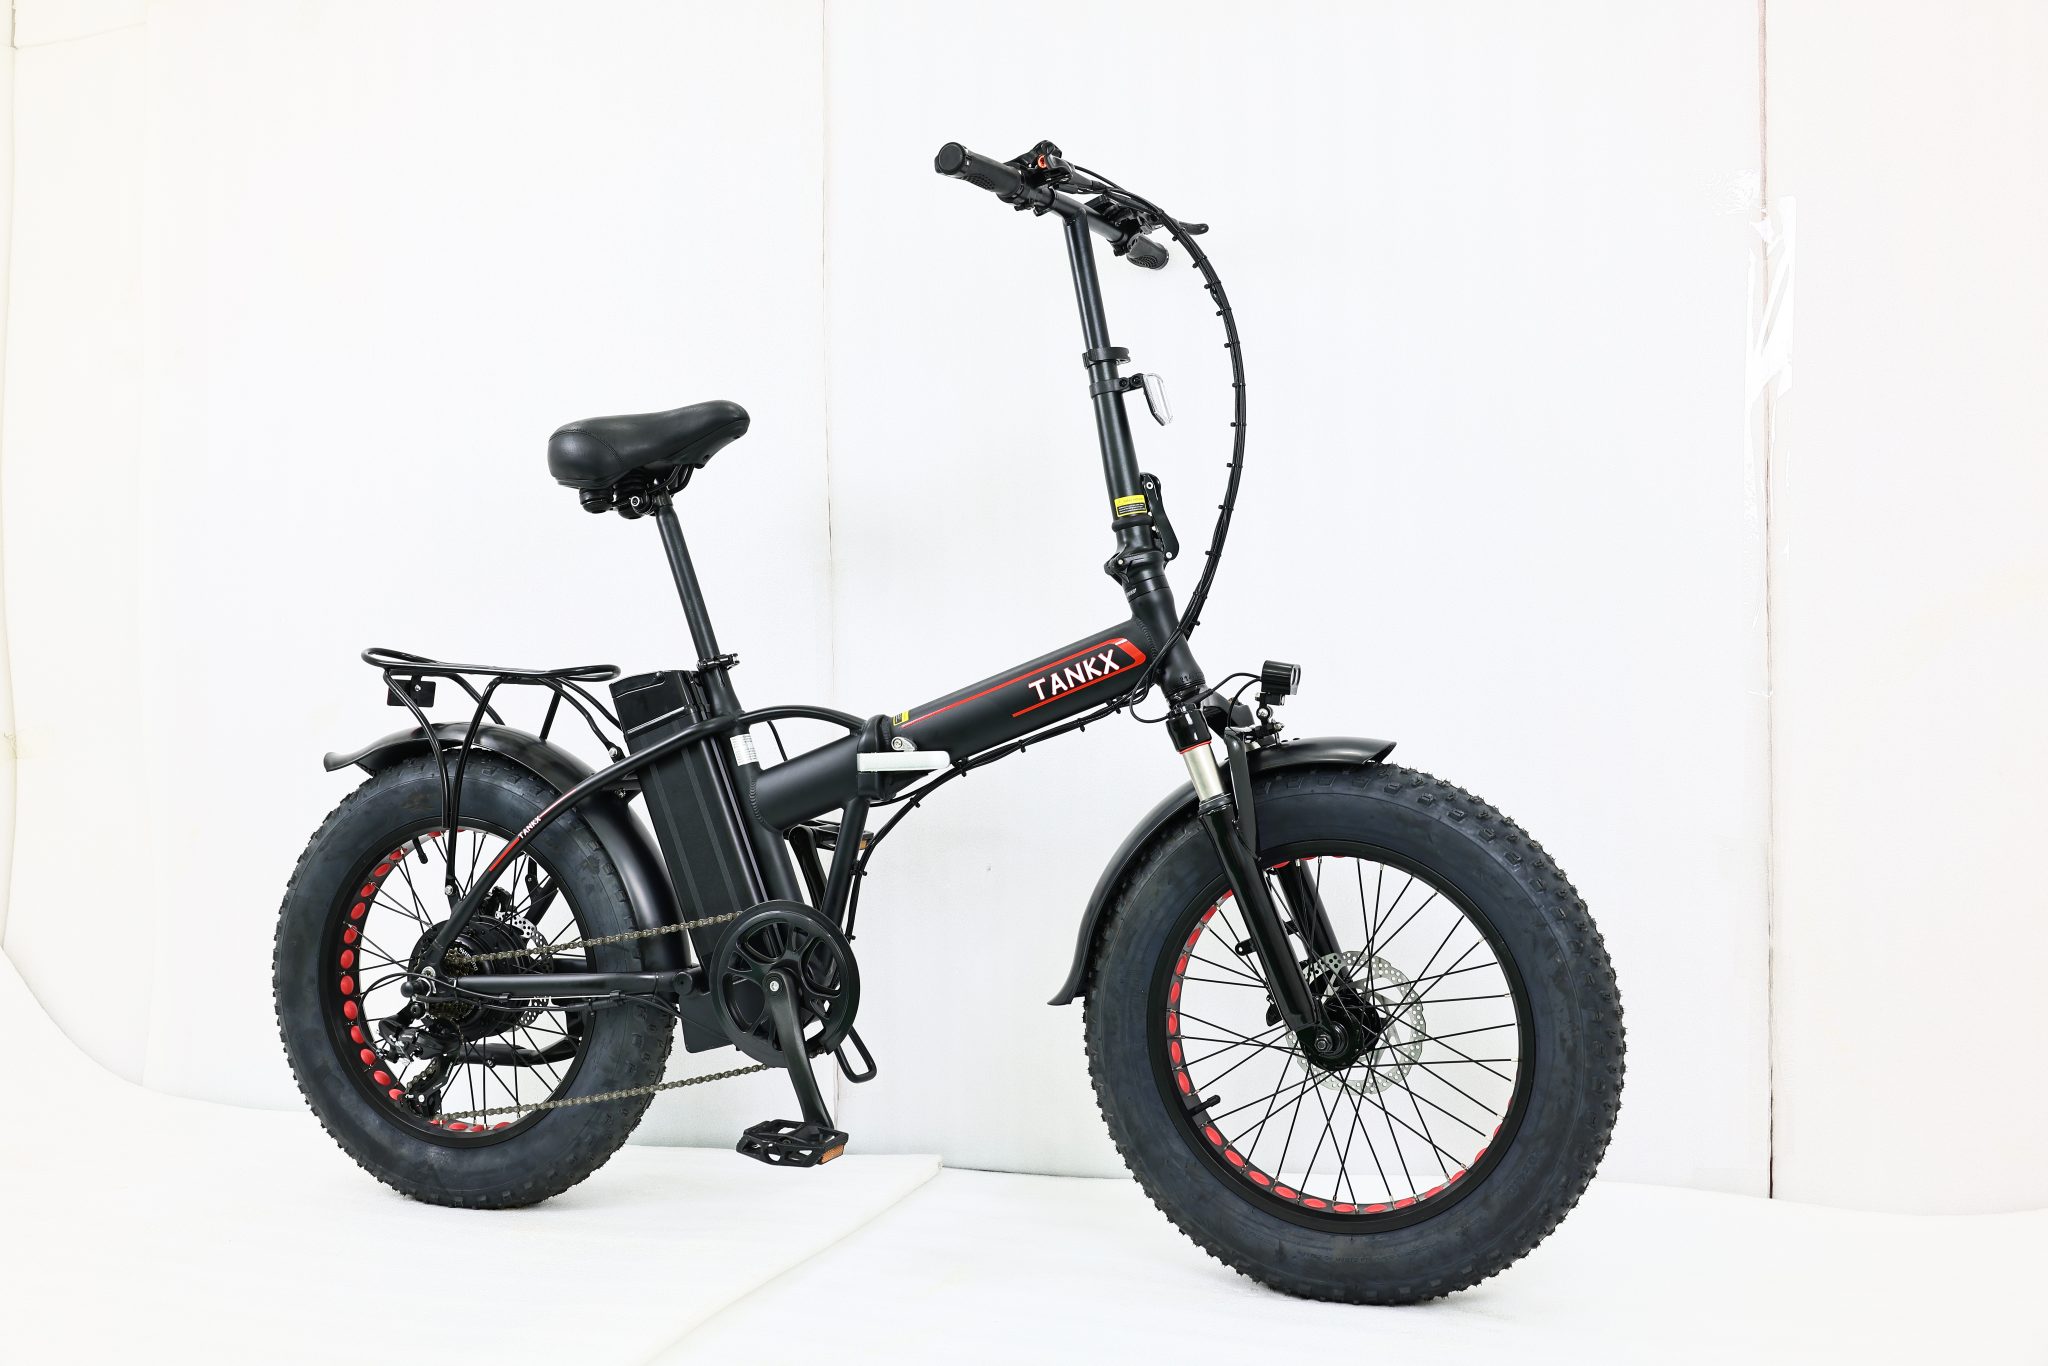 Tankx Bicycles – Ebike electric bikes